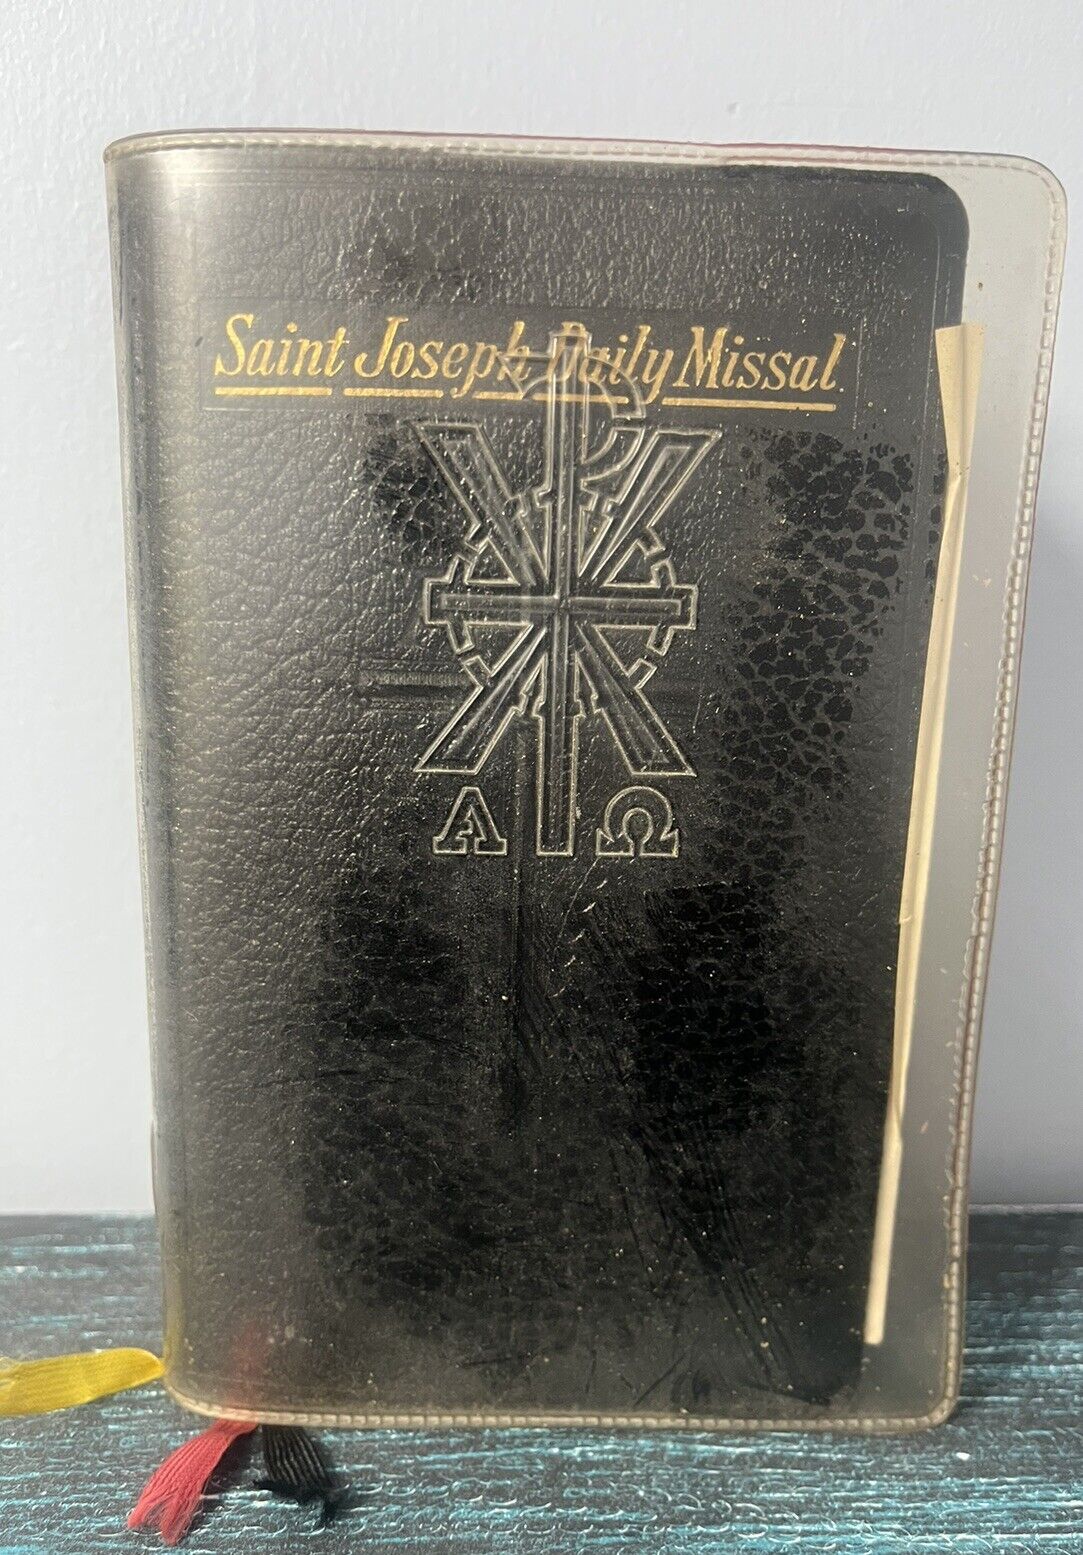 Vintage 1959 Saint Joseph Daily Missal by Rev.Hugo Hoever